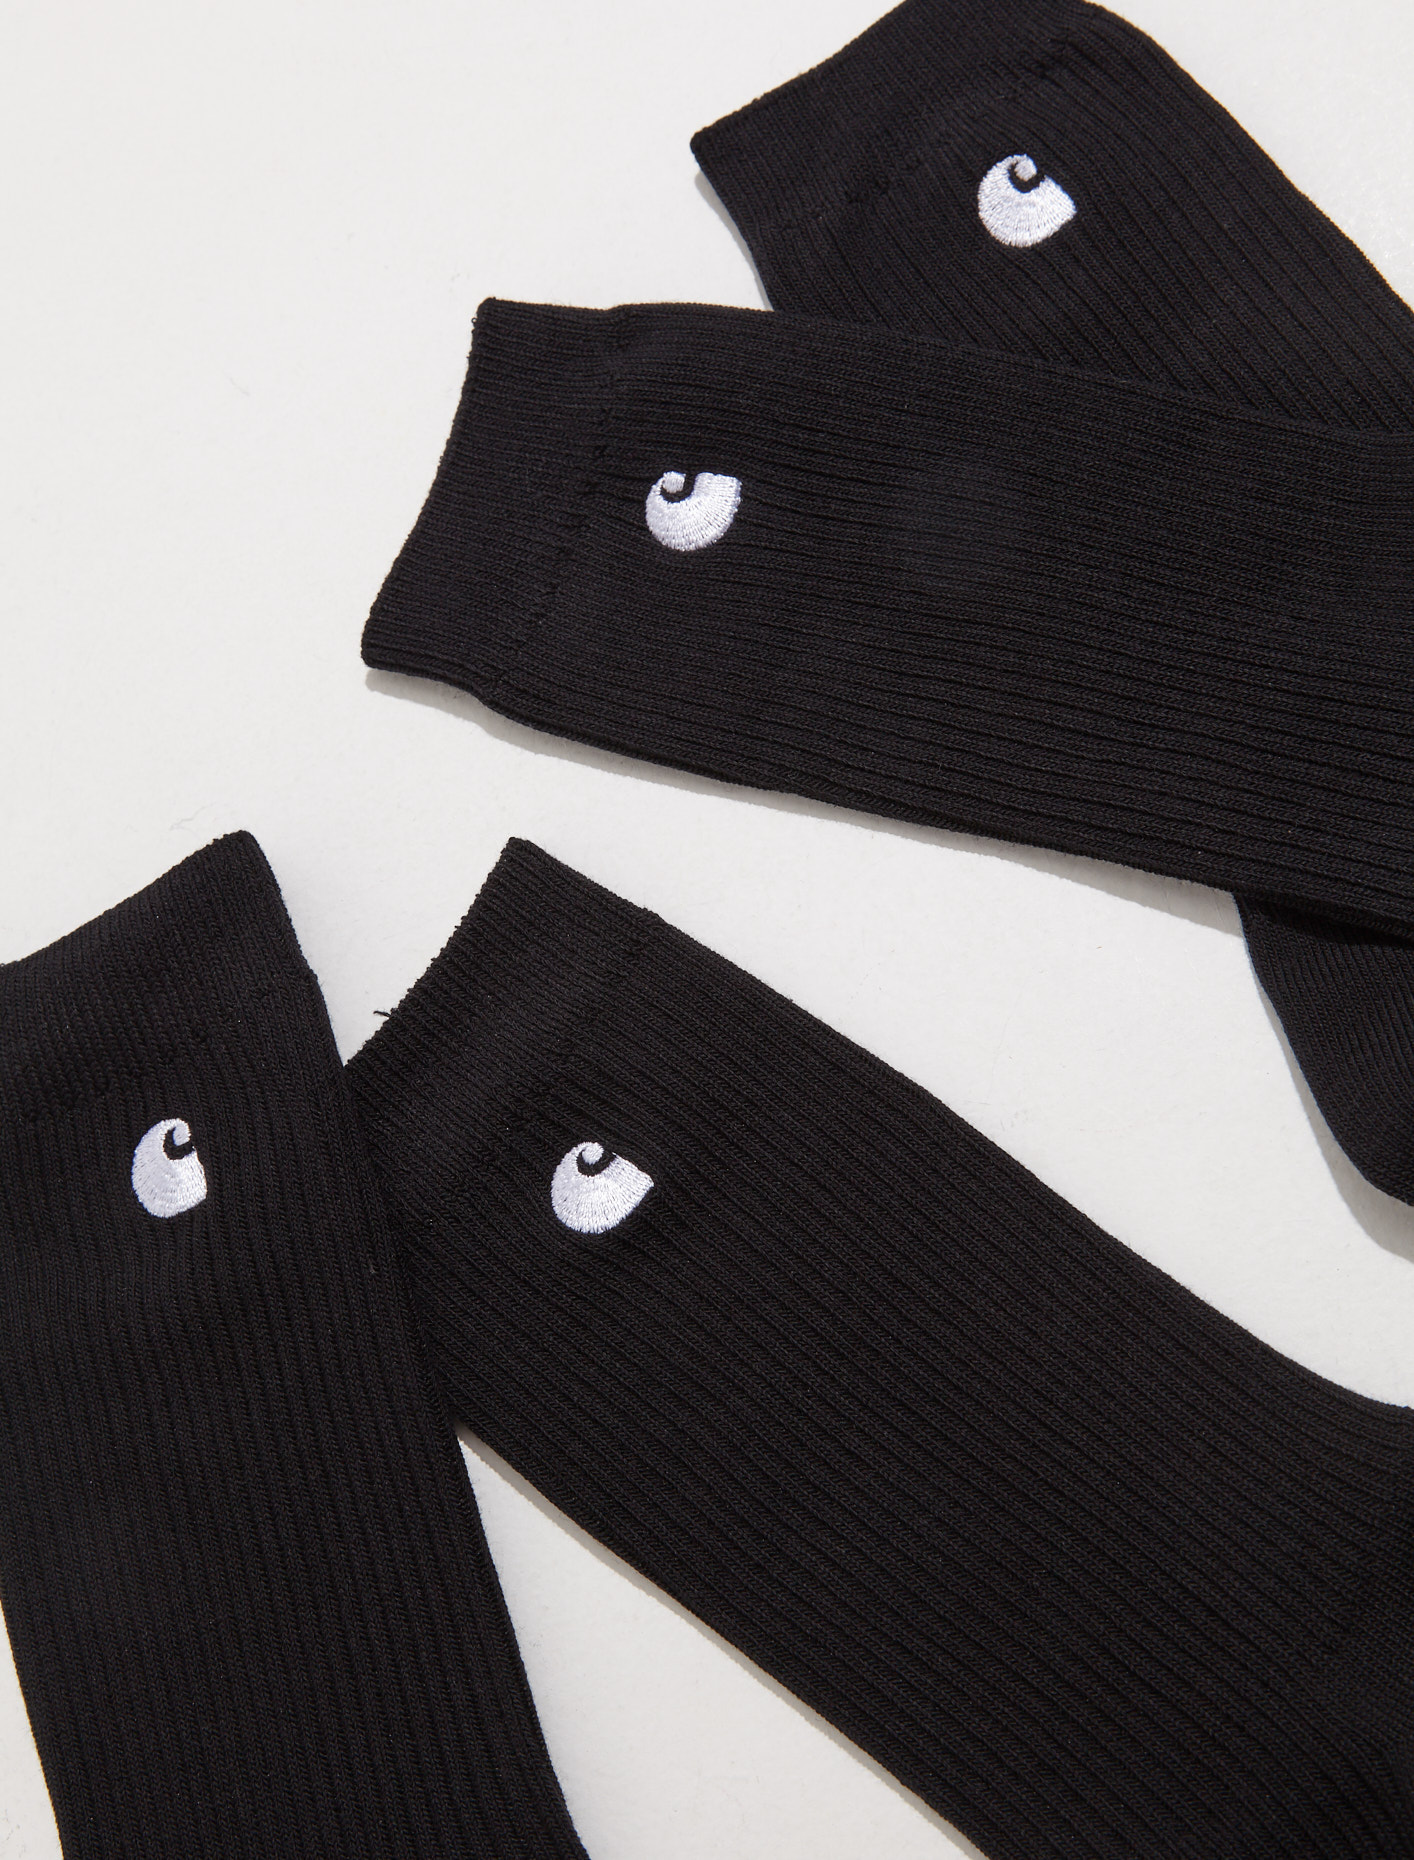 Carhartt WIP Madison Pack Socks in Black | Voo Store Berlin | Worldwide ...